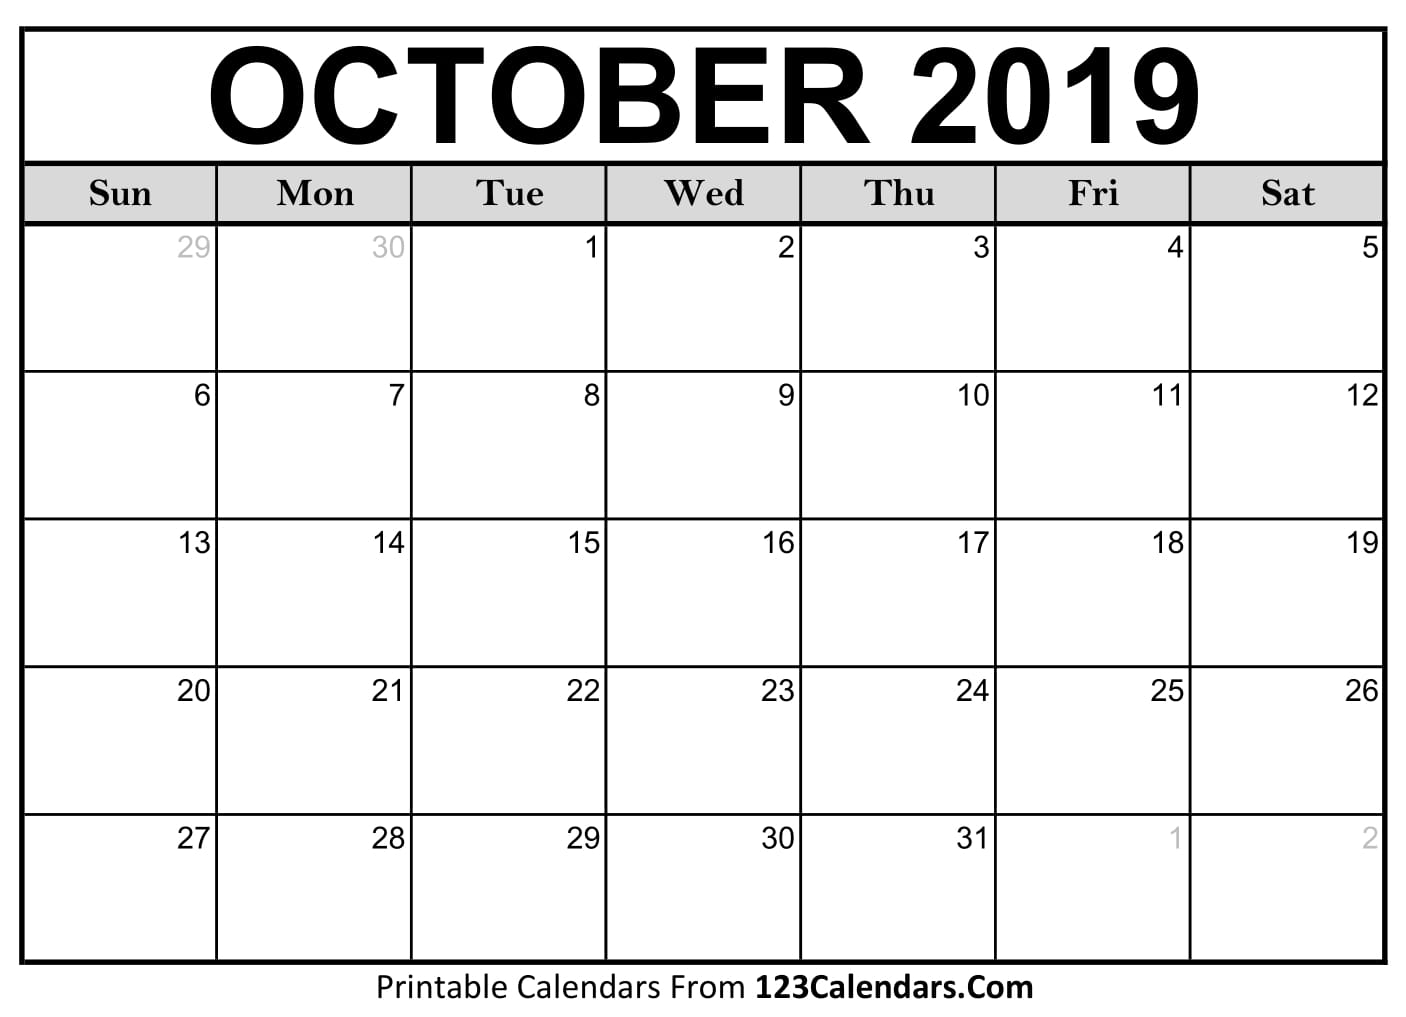 printable-october-2018-calendar-templates-123calendars-com